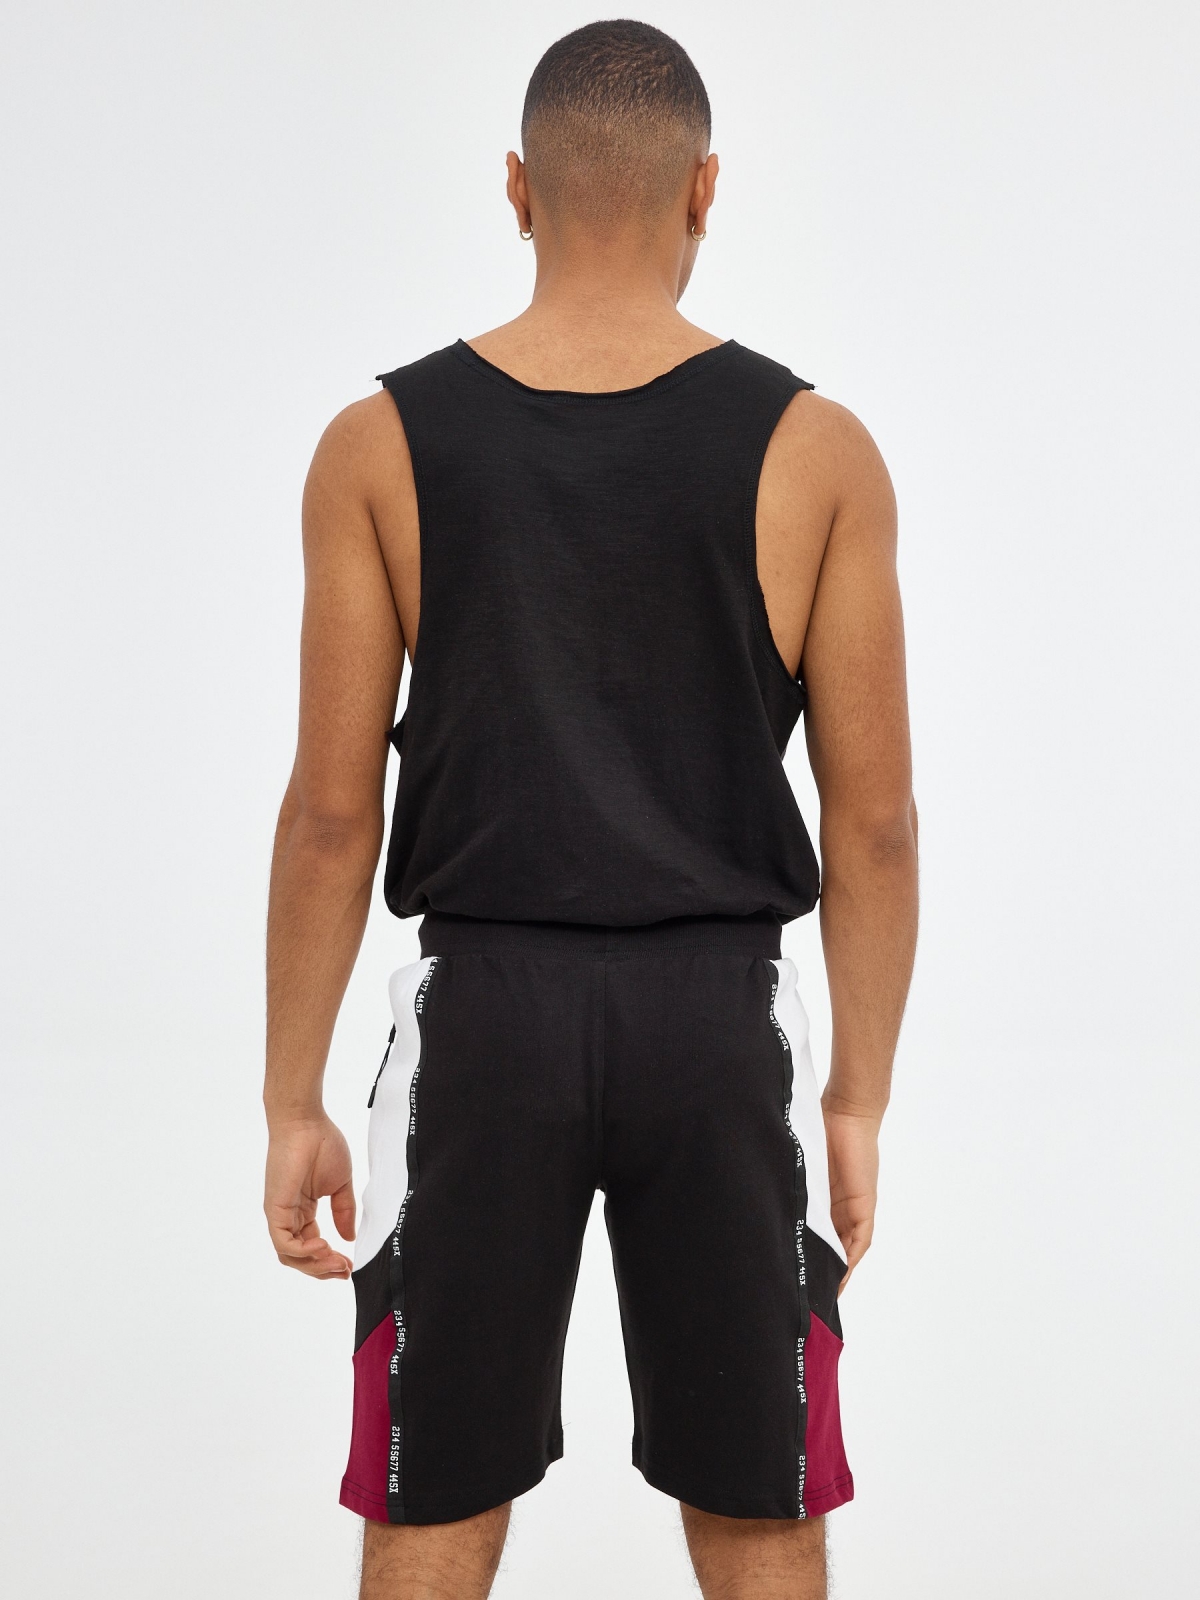 Sport jogger bermuda shorts black middle back view